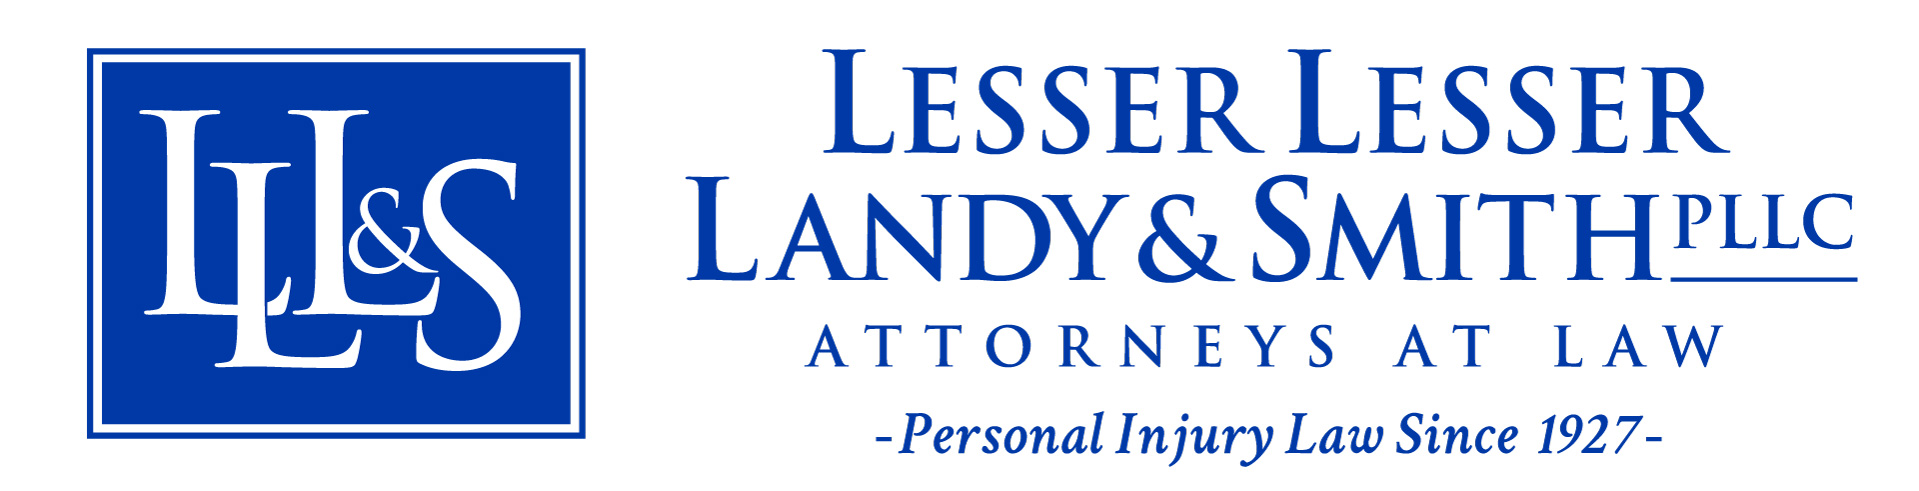 Lesser Lesser Landy & Smith PLLC